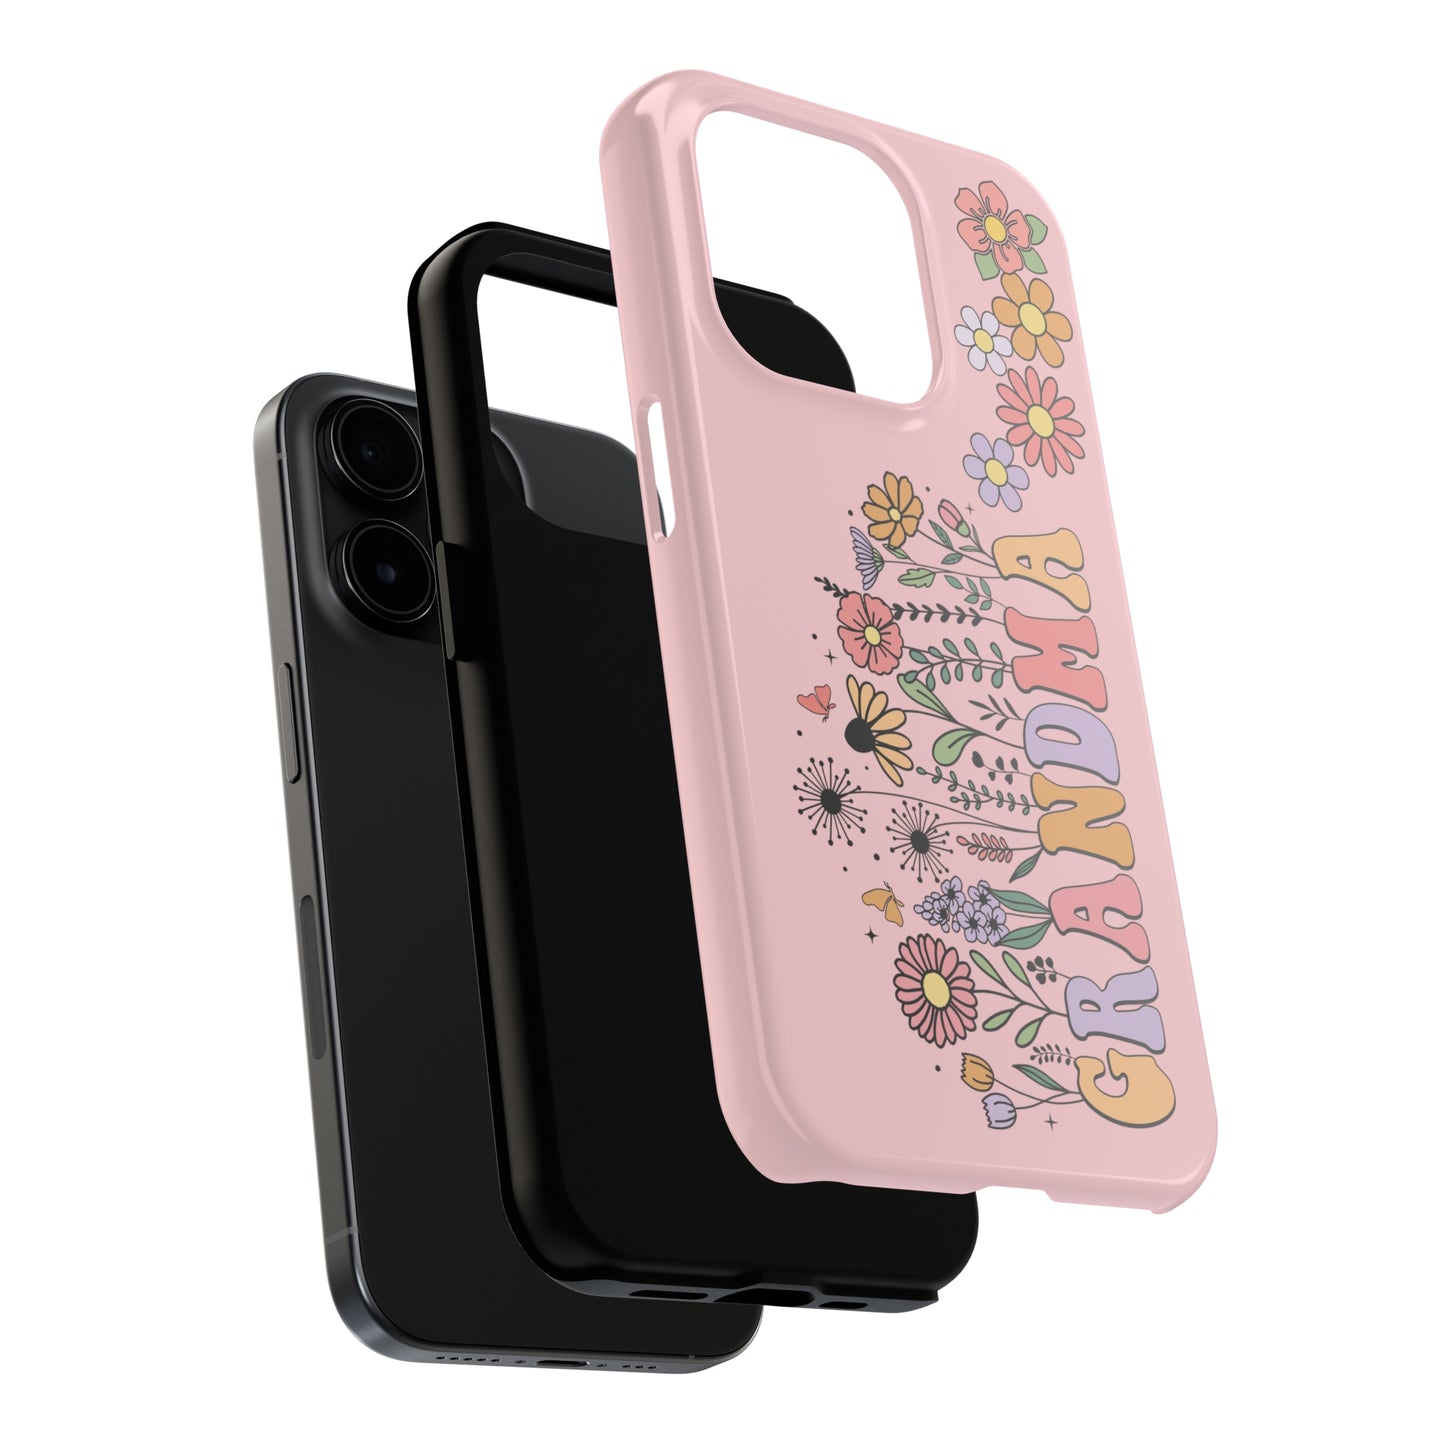 Grandma iPhone Case, Grandma Flower iPhone Case, Grandma Apple Phone Case